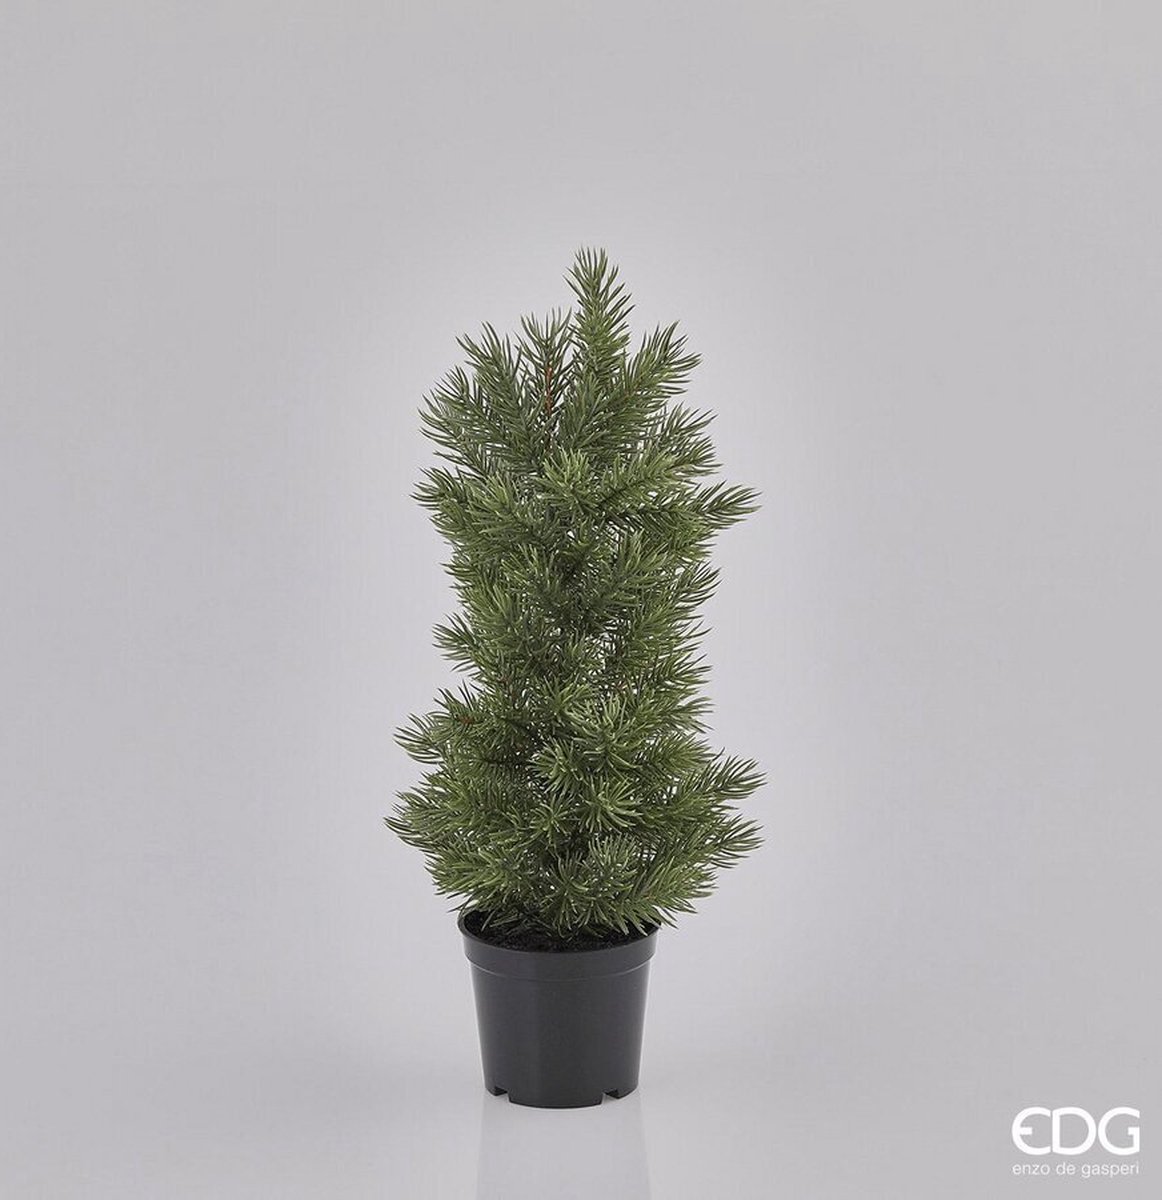 EDG - Enzo De Gasperi Kerstboom H40